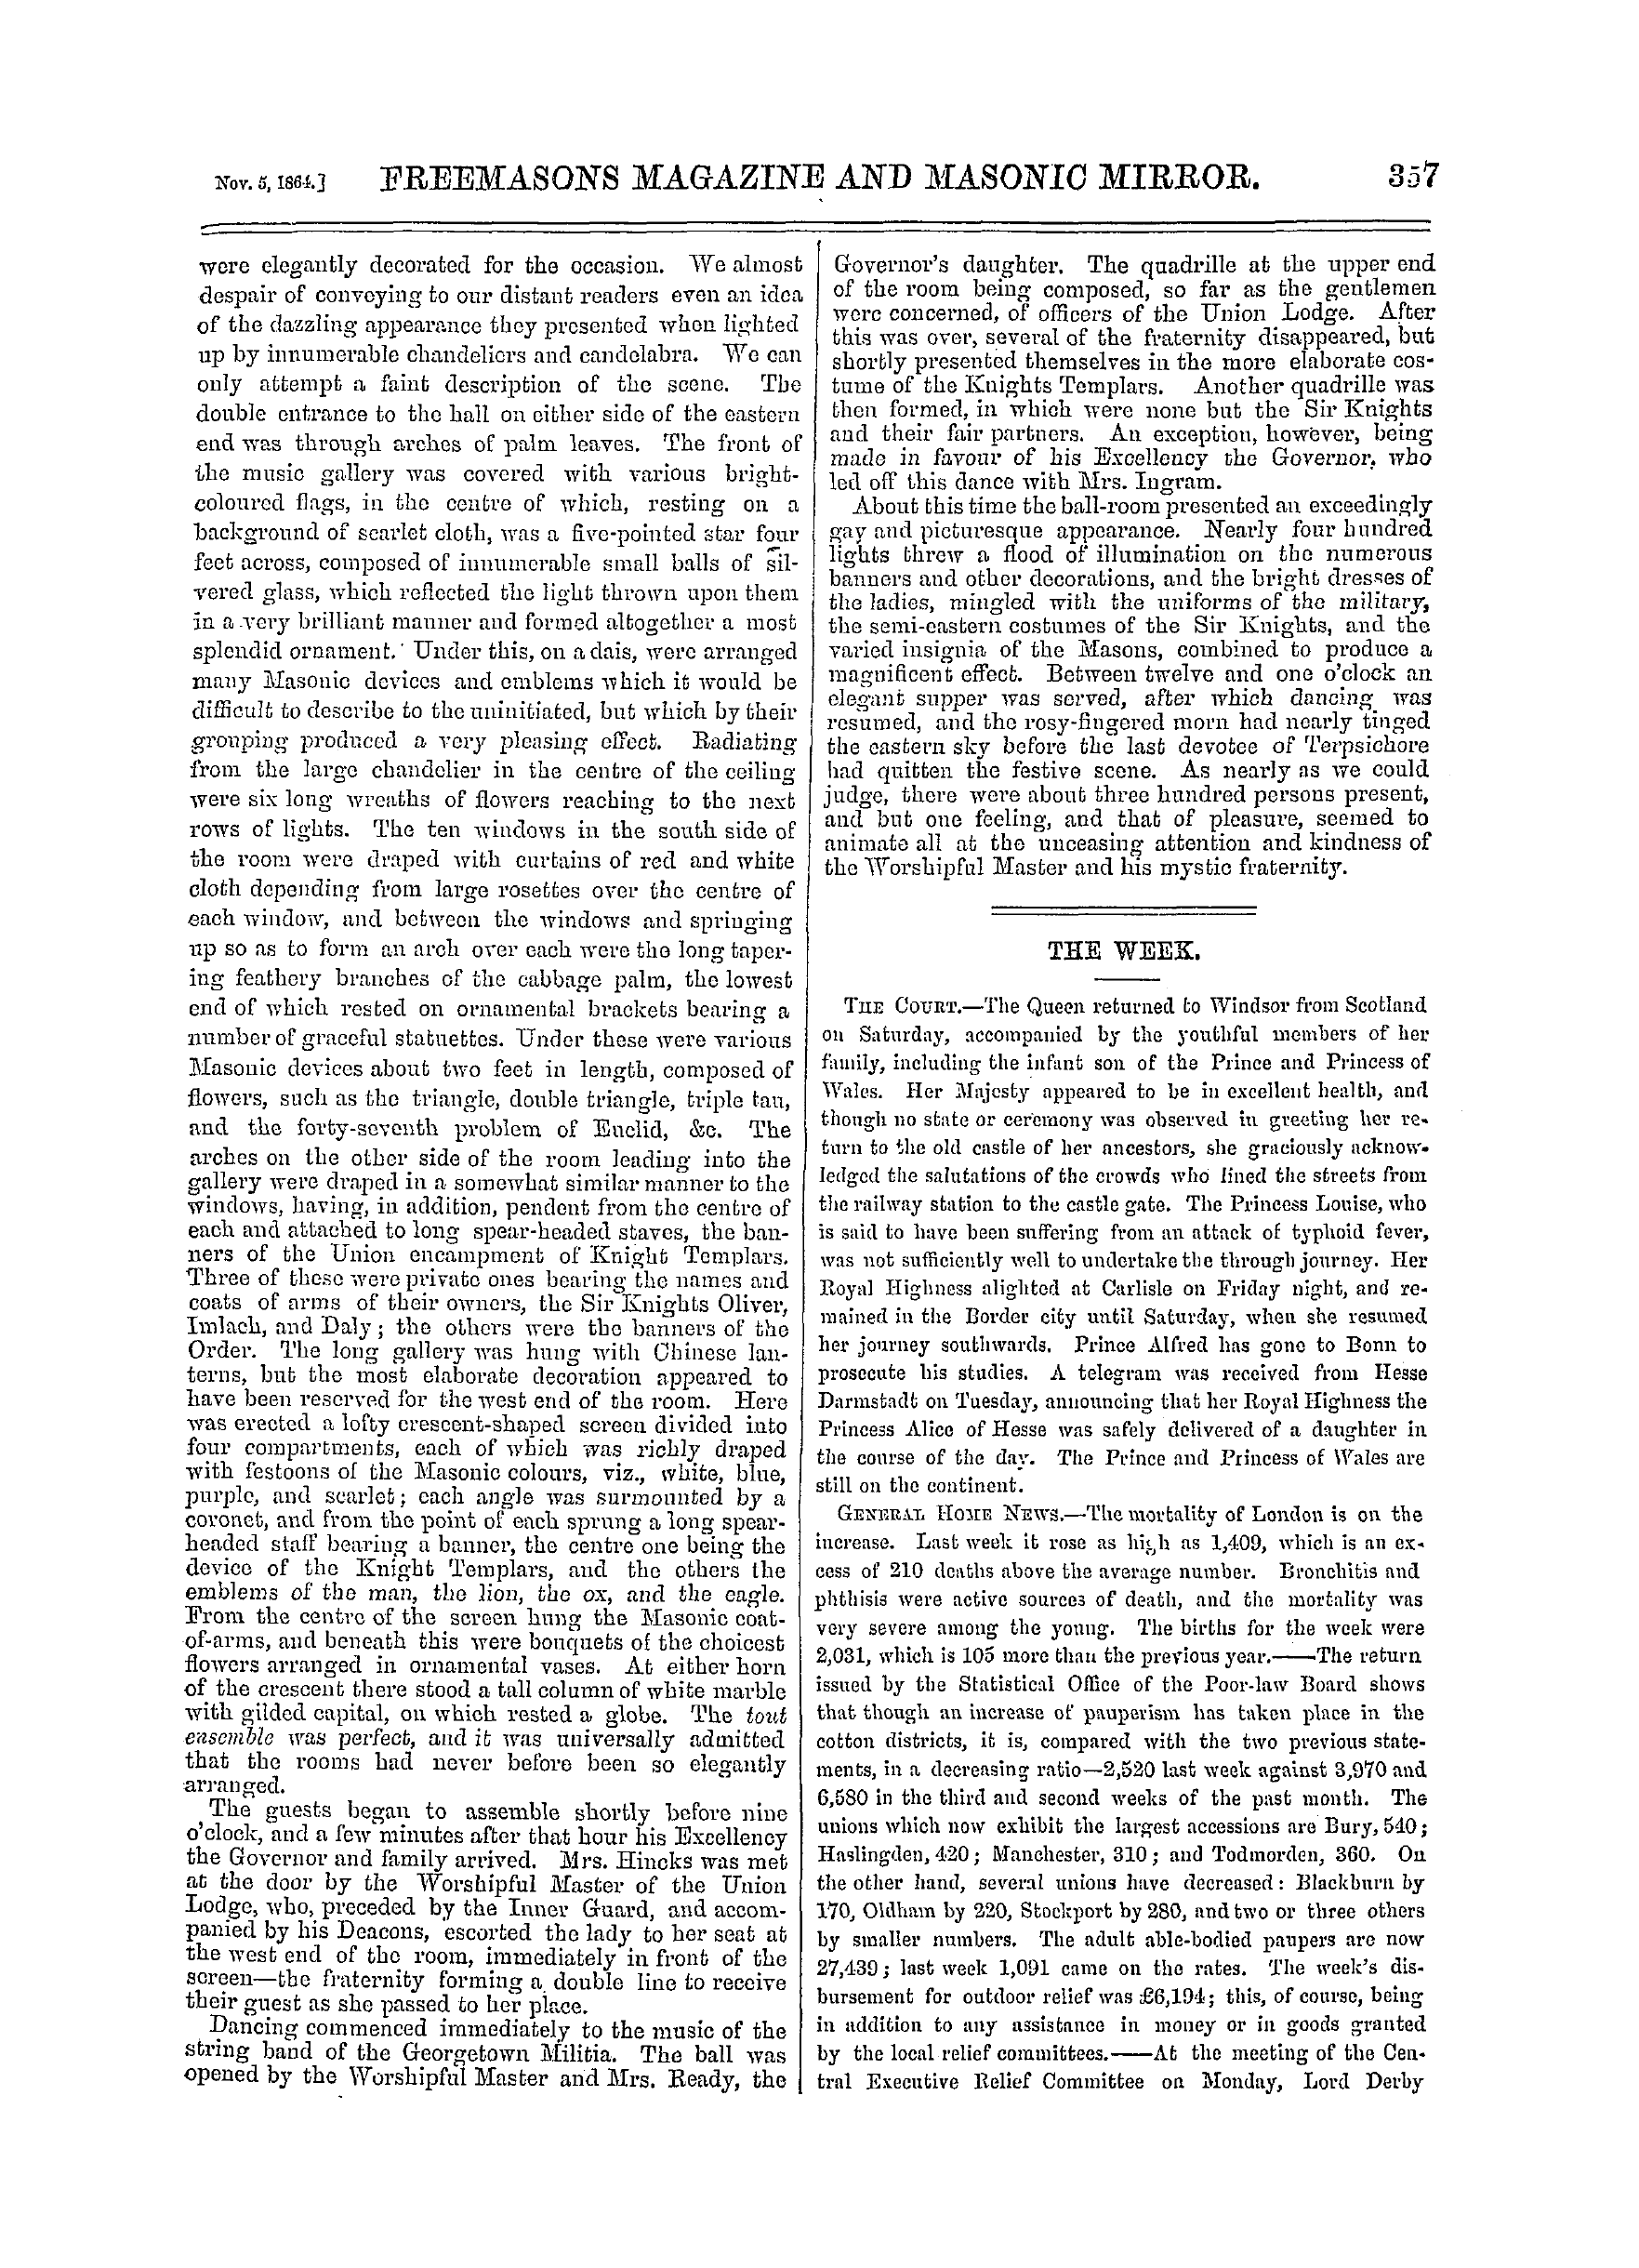 The Freemasons' Monthly Magazine: 1864-11-05 - Masonic Festivities.